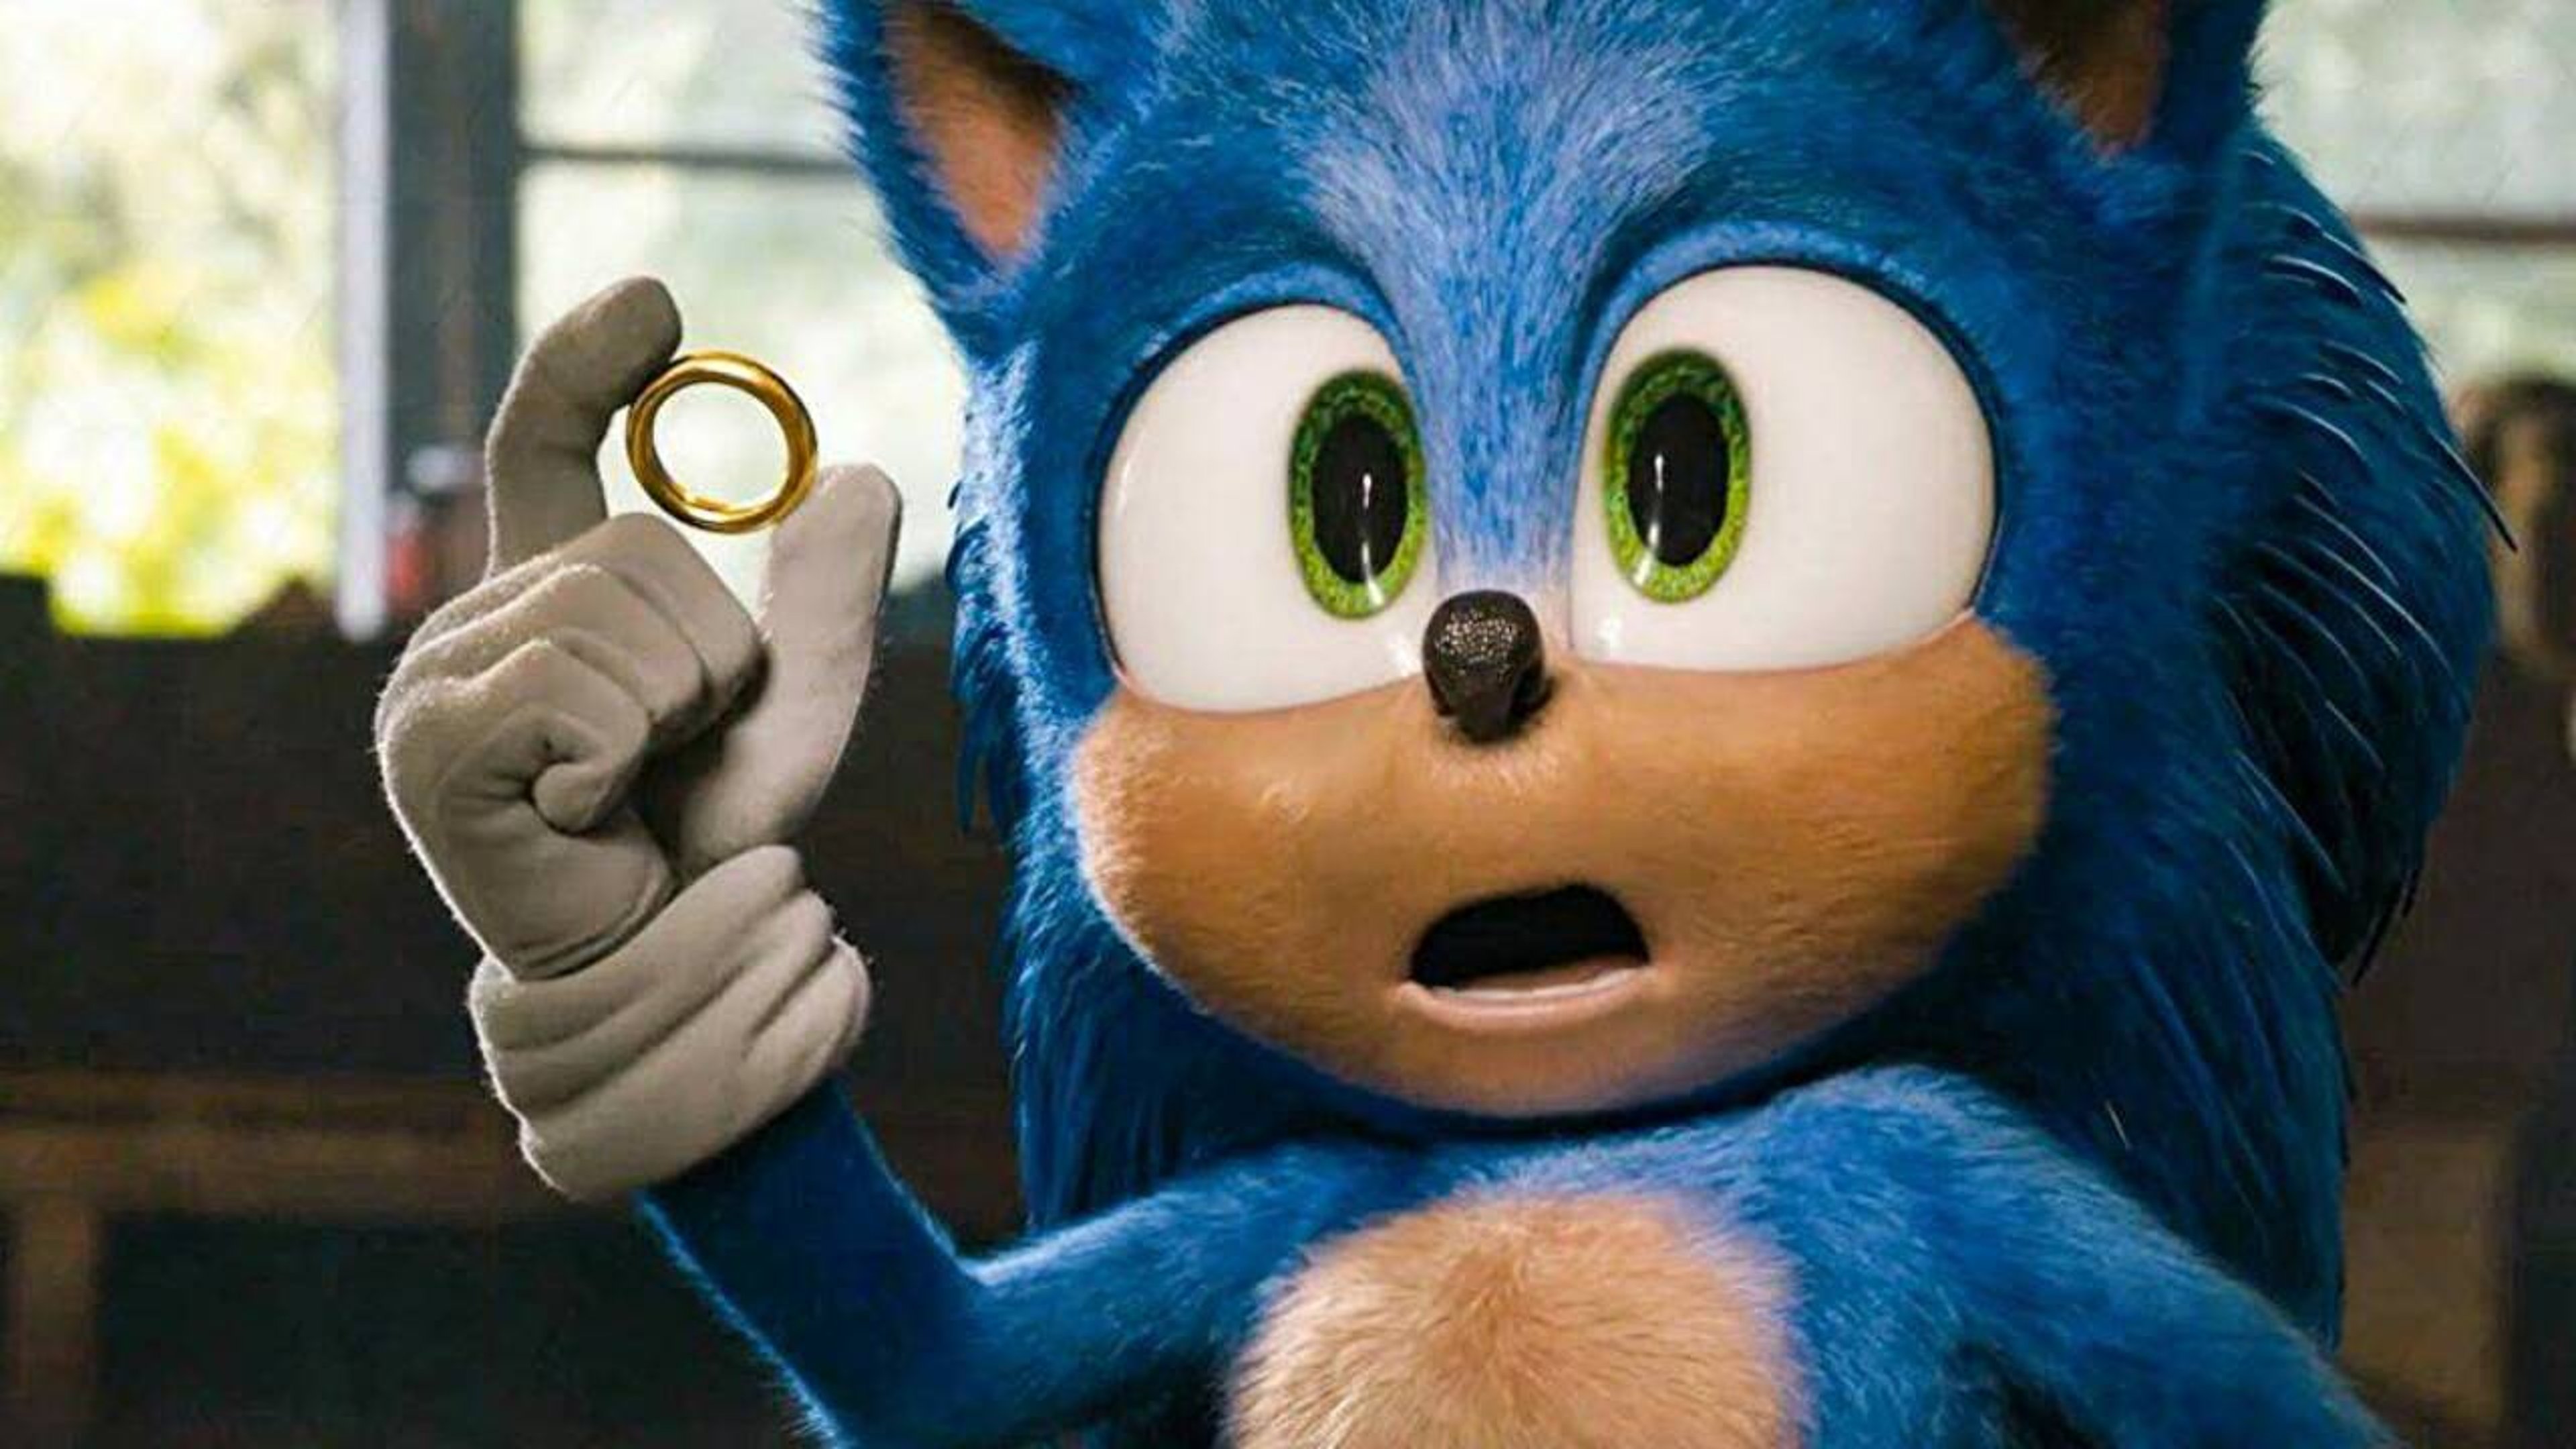 Sonic 3: svelata la data d’uscita del film